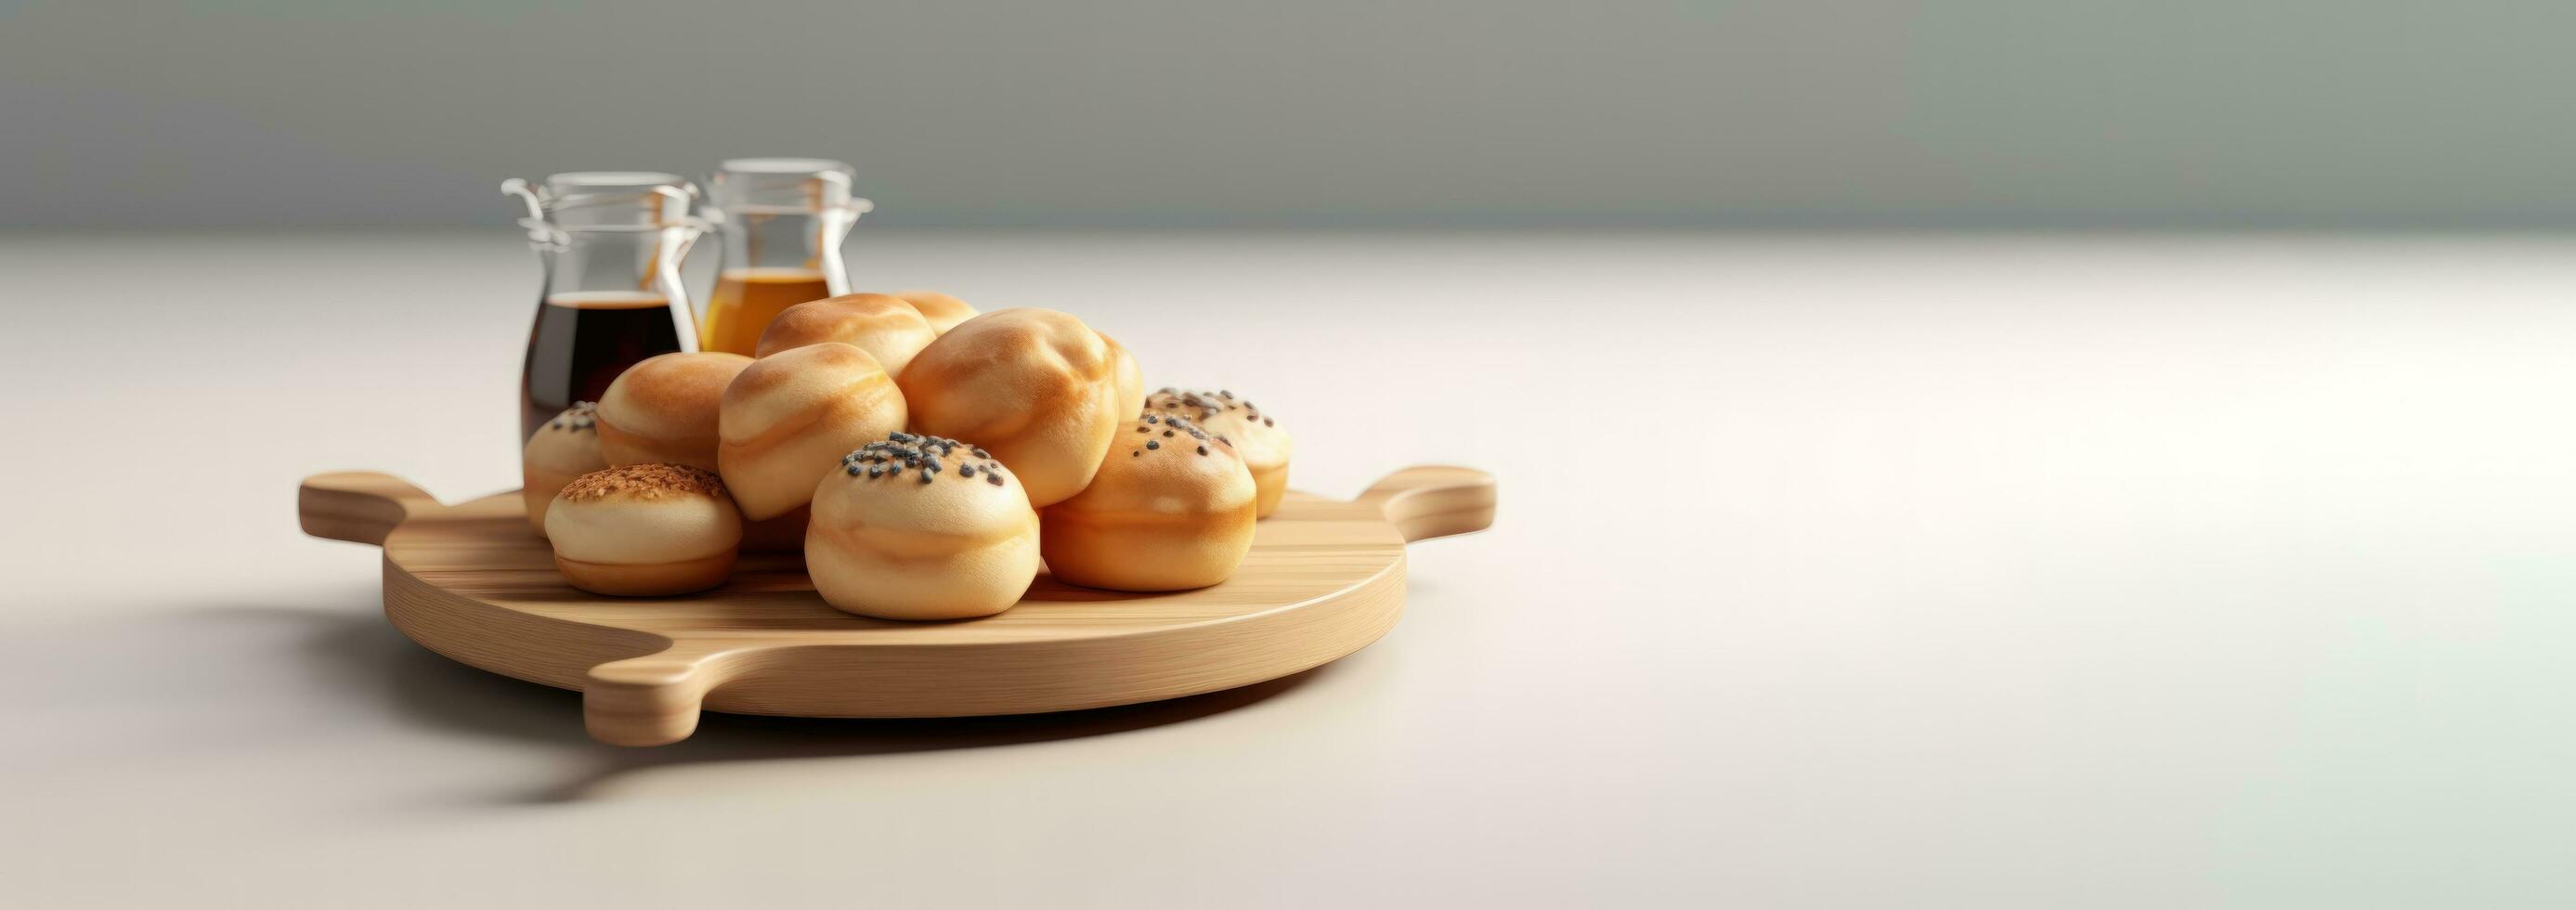 Homemade Dutch Poffertjes Pancakes on the kitchen AI generated photo